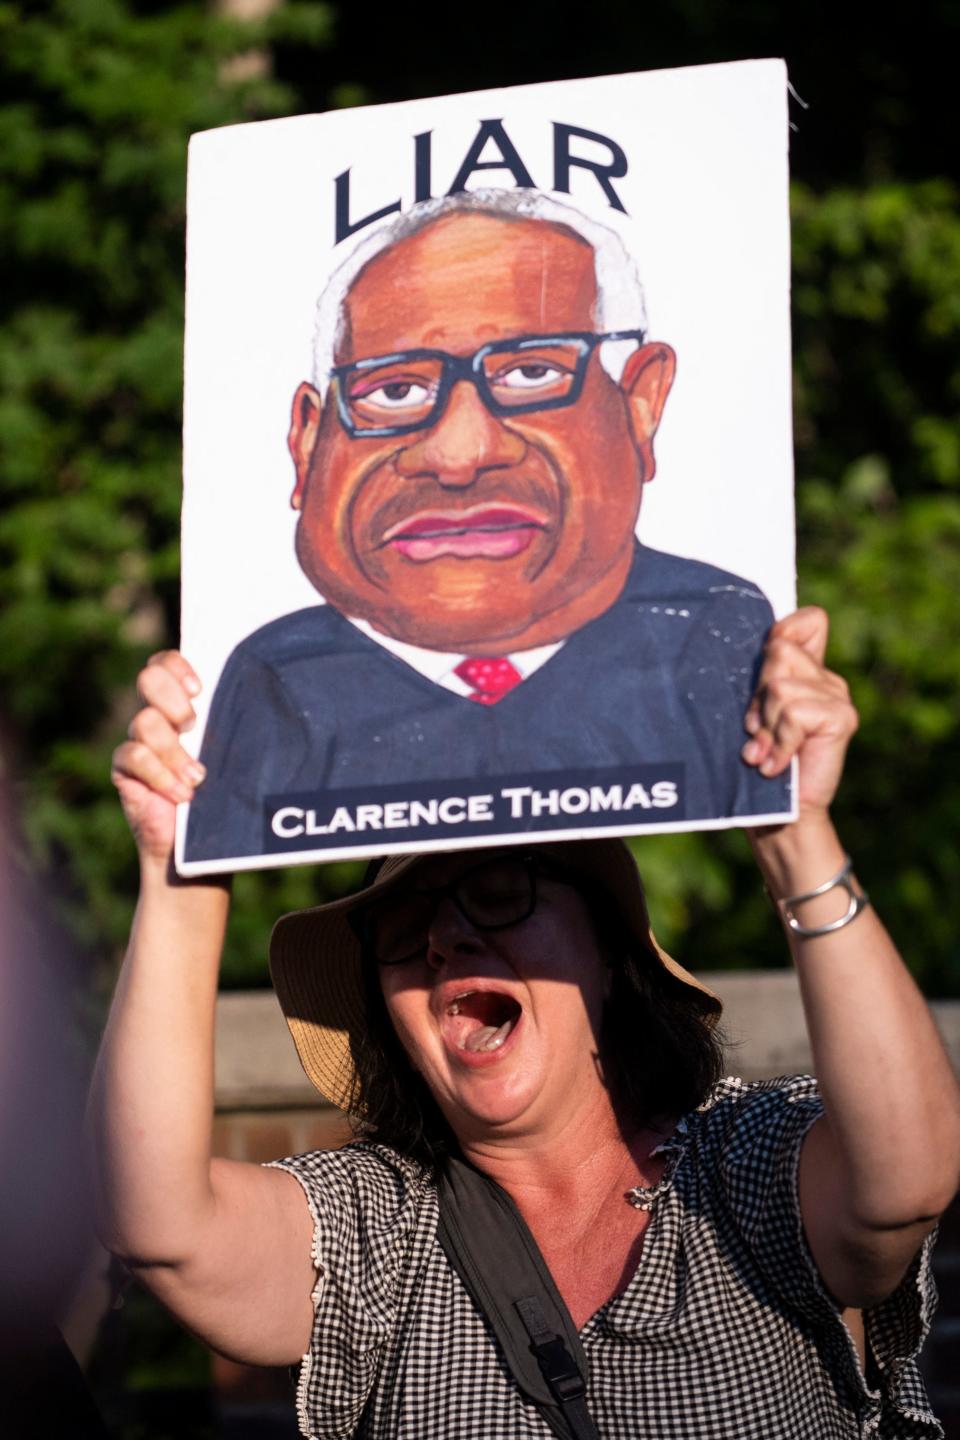 Clarence Thomas liar sign